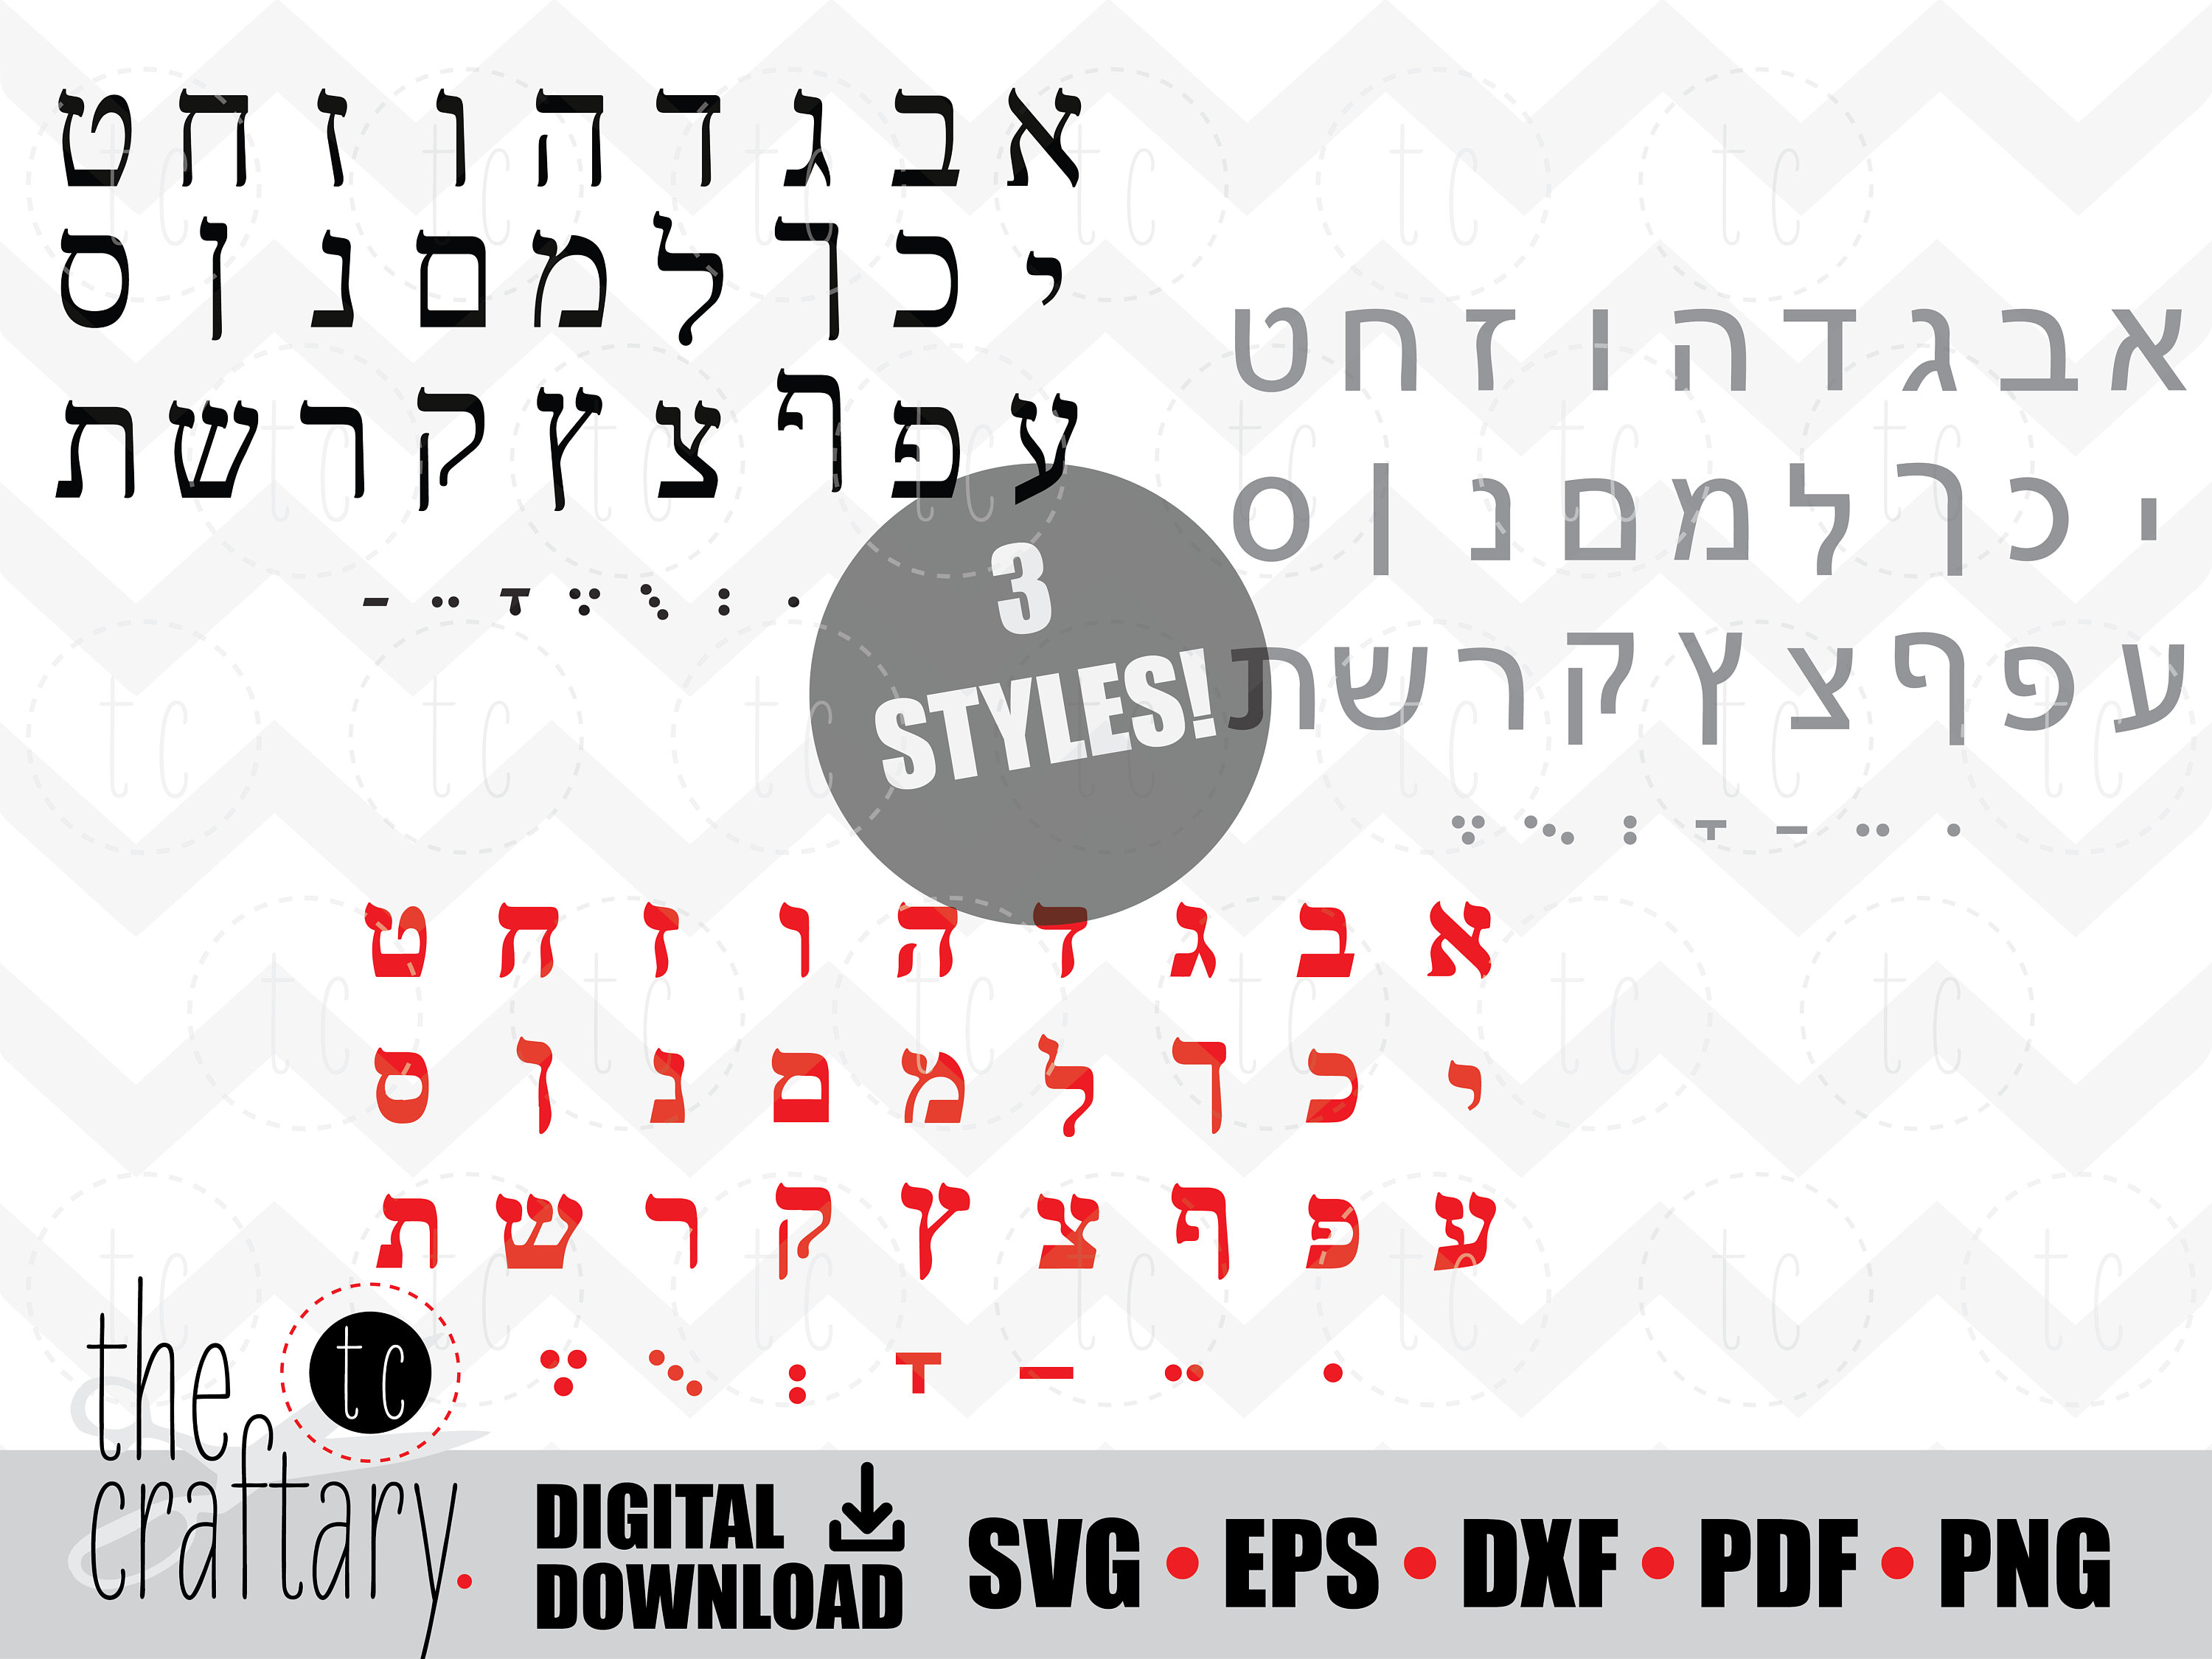 Hebrew Alphabet Letters